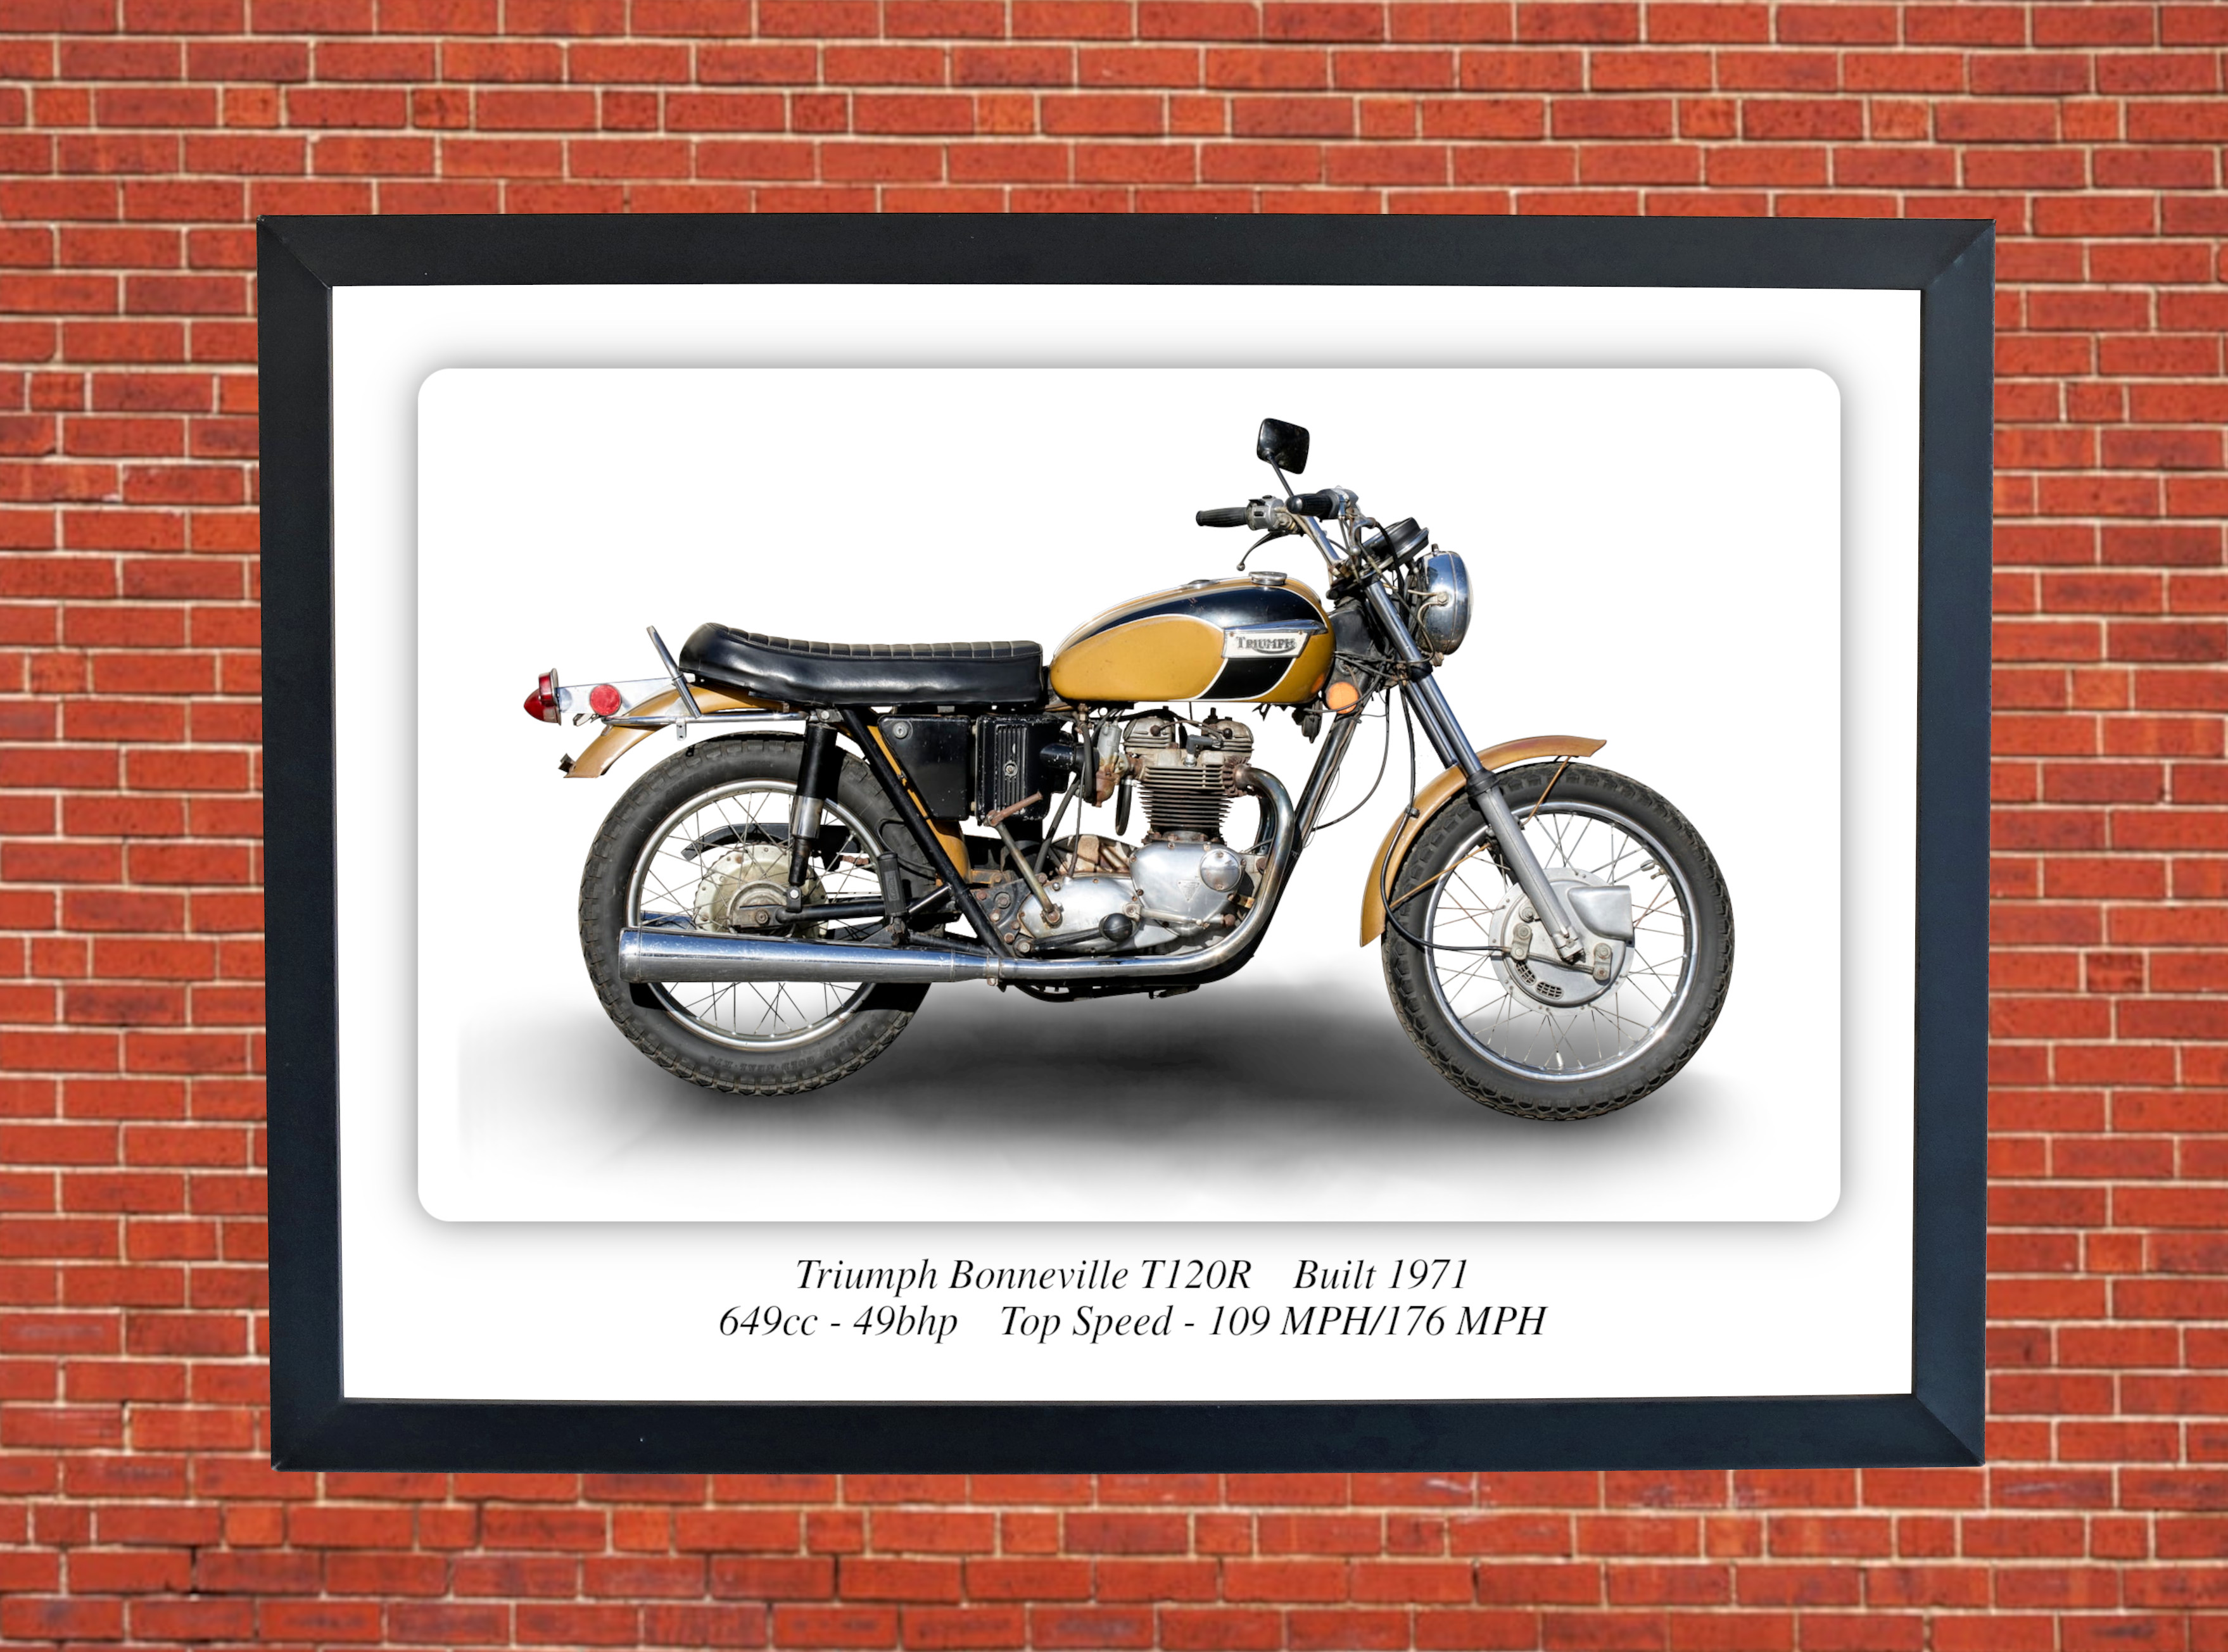   Triumph Bonneville T120R 1971 Motorbike Motorcycle - A3/A4 Size Print Poster